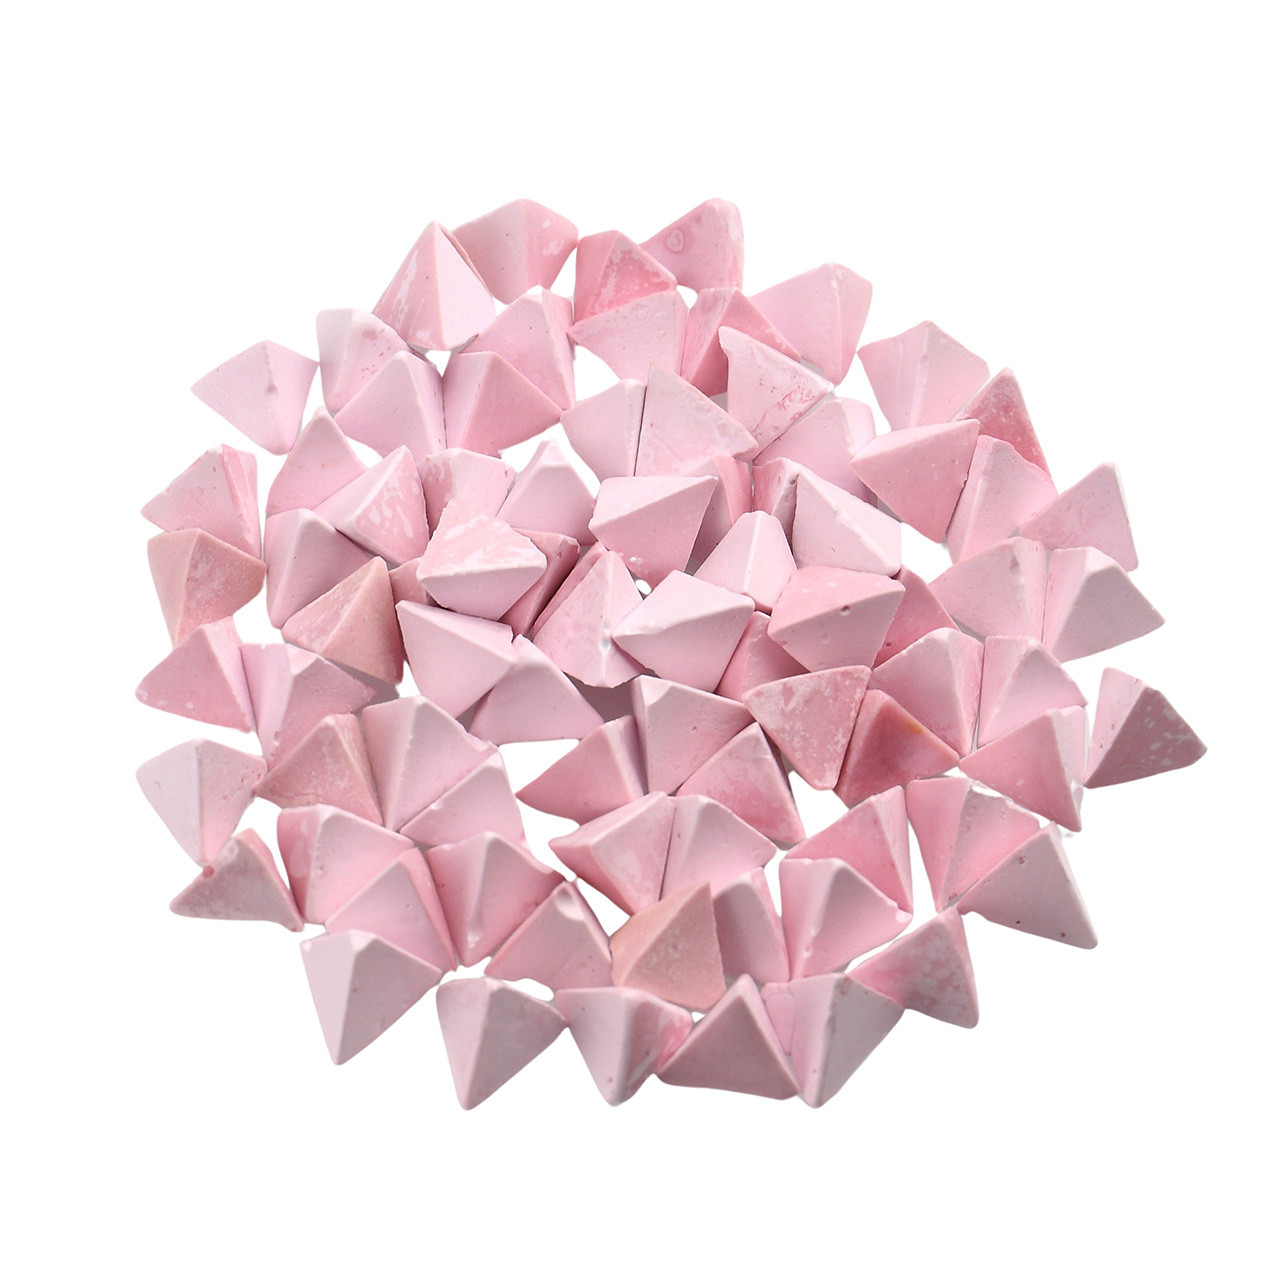 Avalon Pink Plastic Pyramid 18x18 Media 1kg.